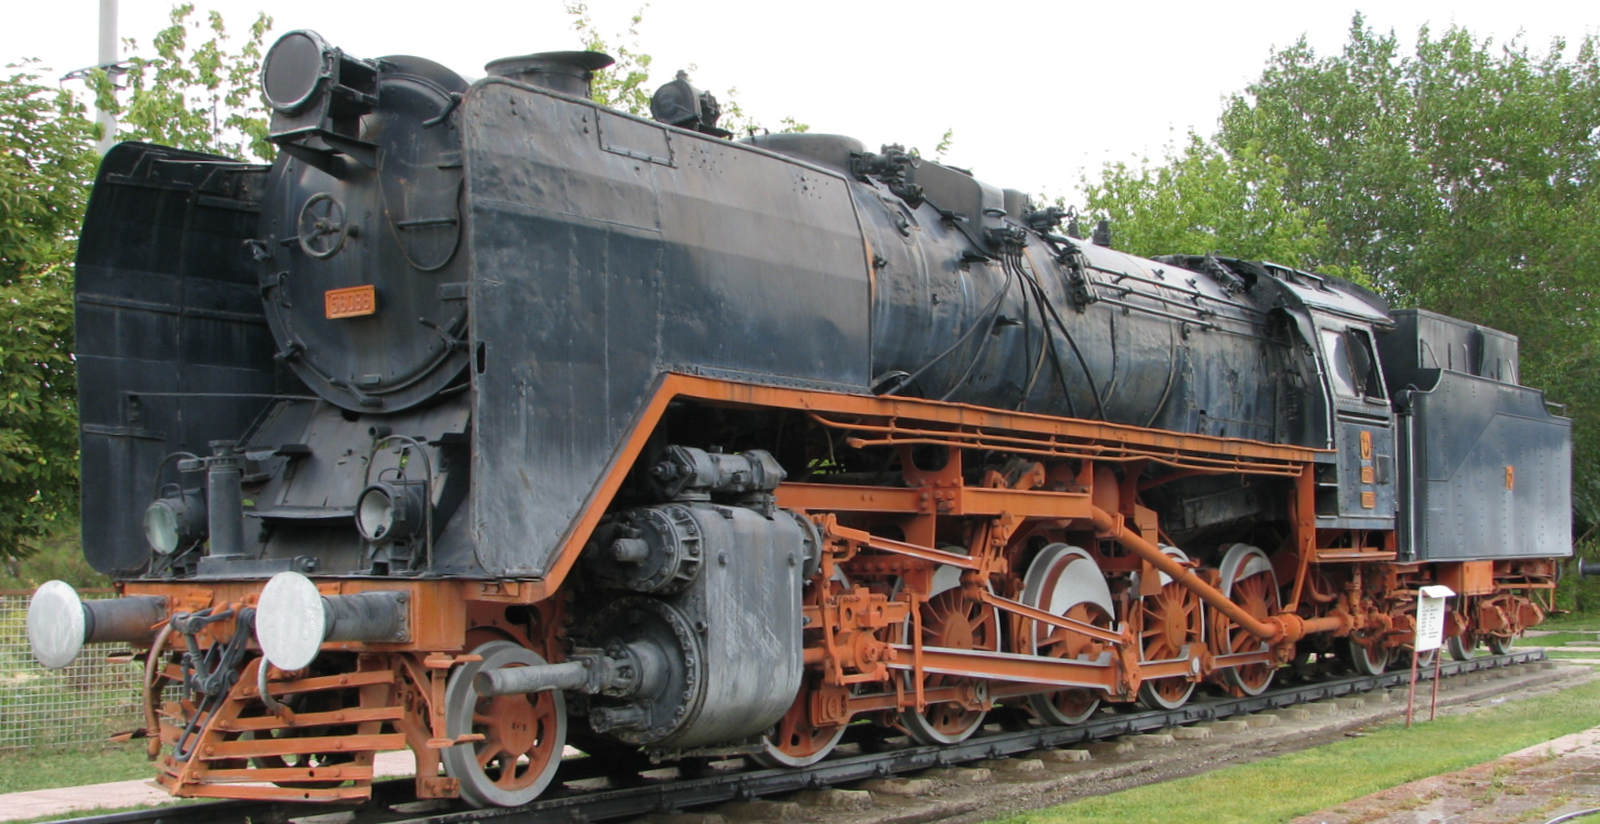 56086 in the steam locomotive museum in Ankara